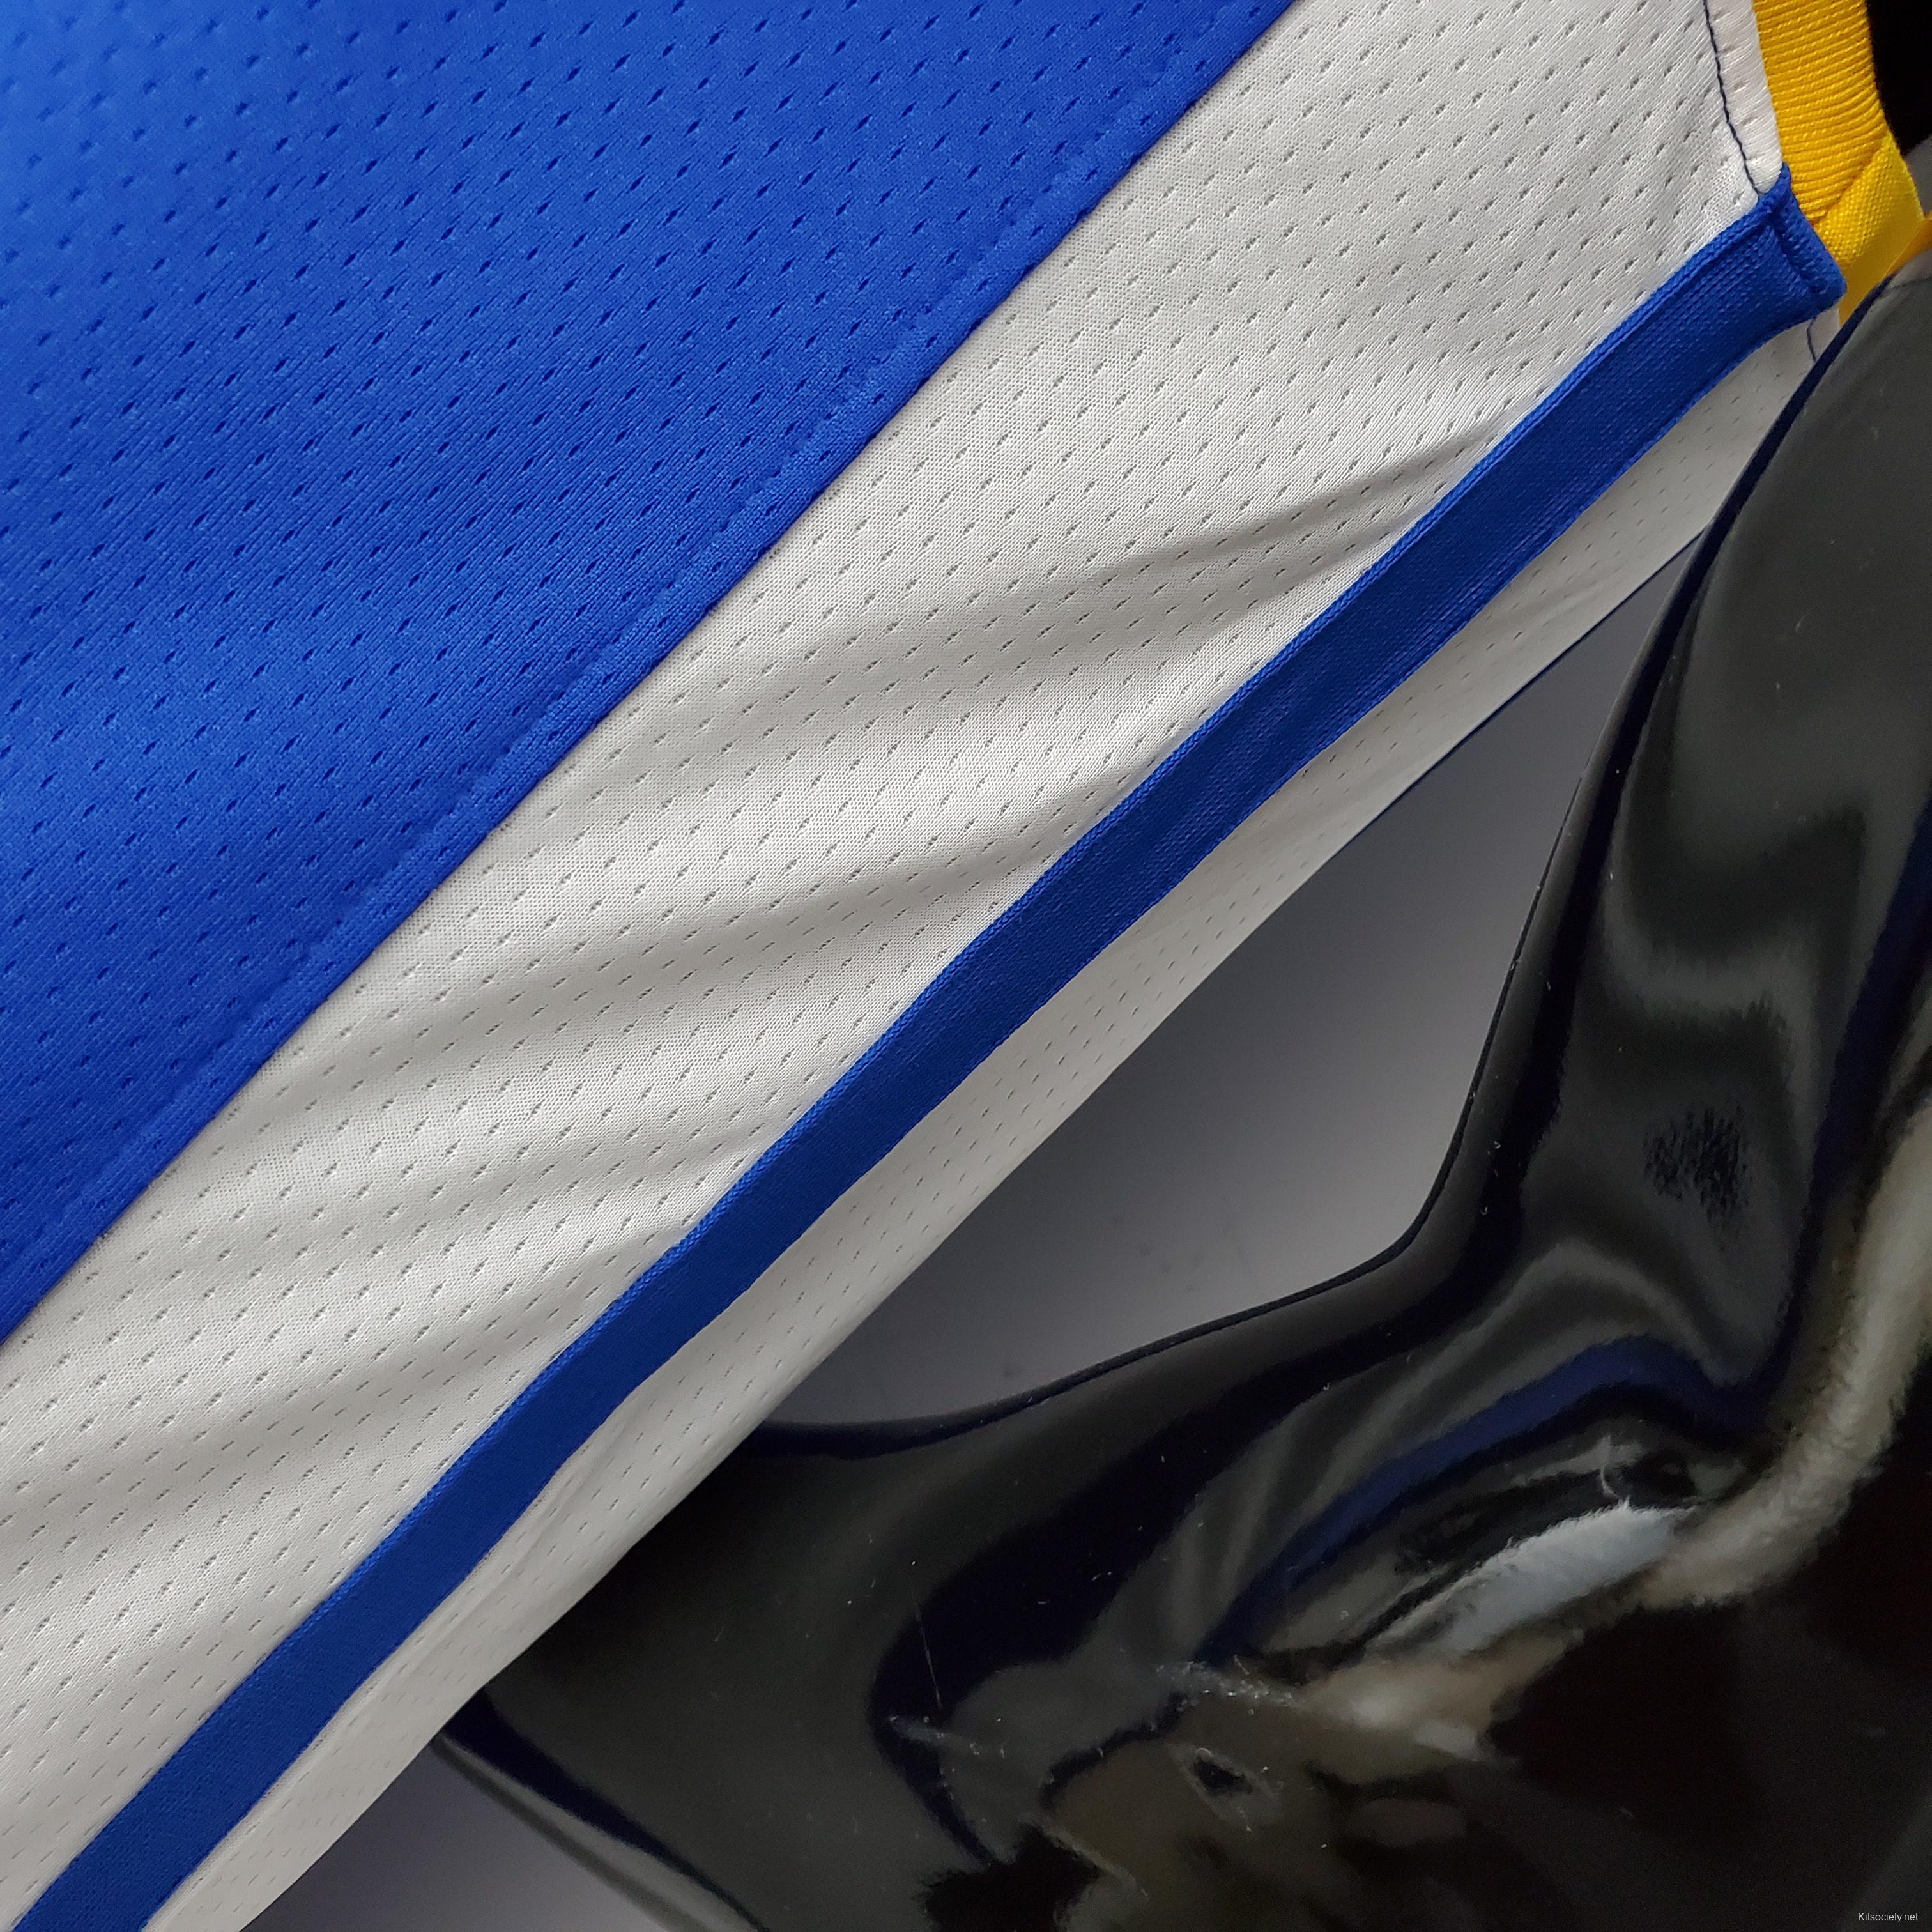 Golden State Warriors Blue Set - Curry 30 (Jersey + Shorts) – Pro